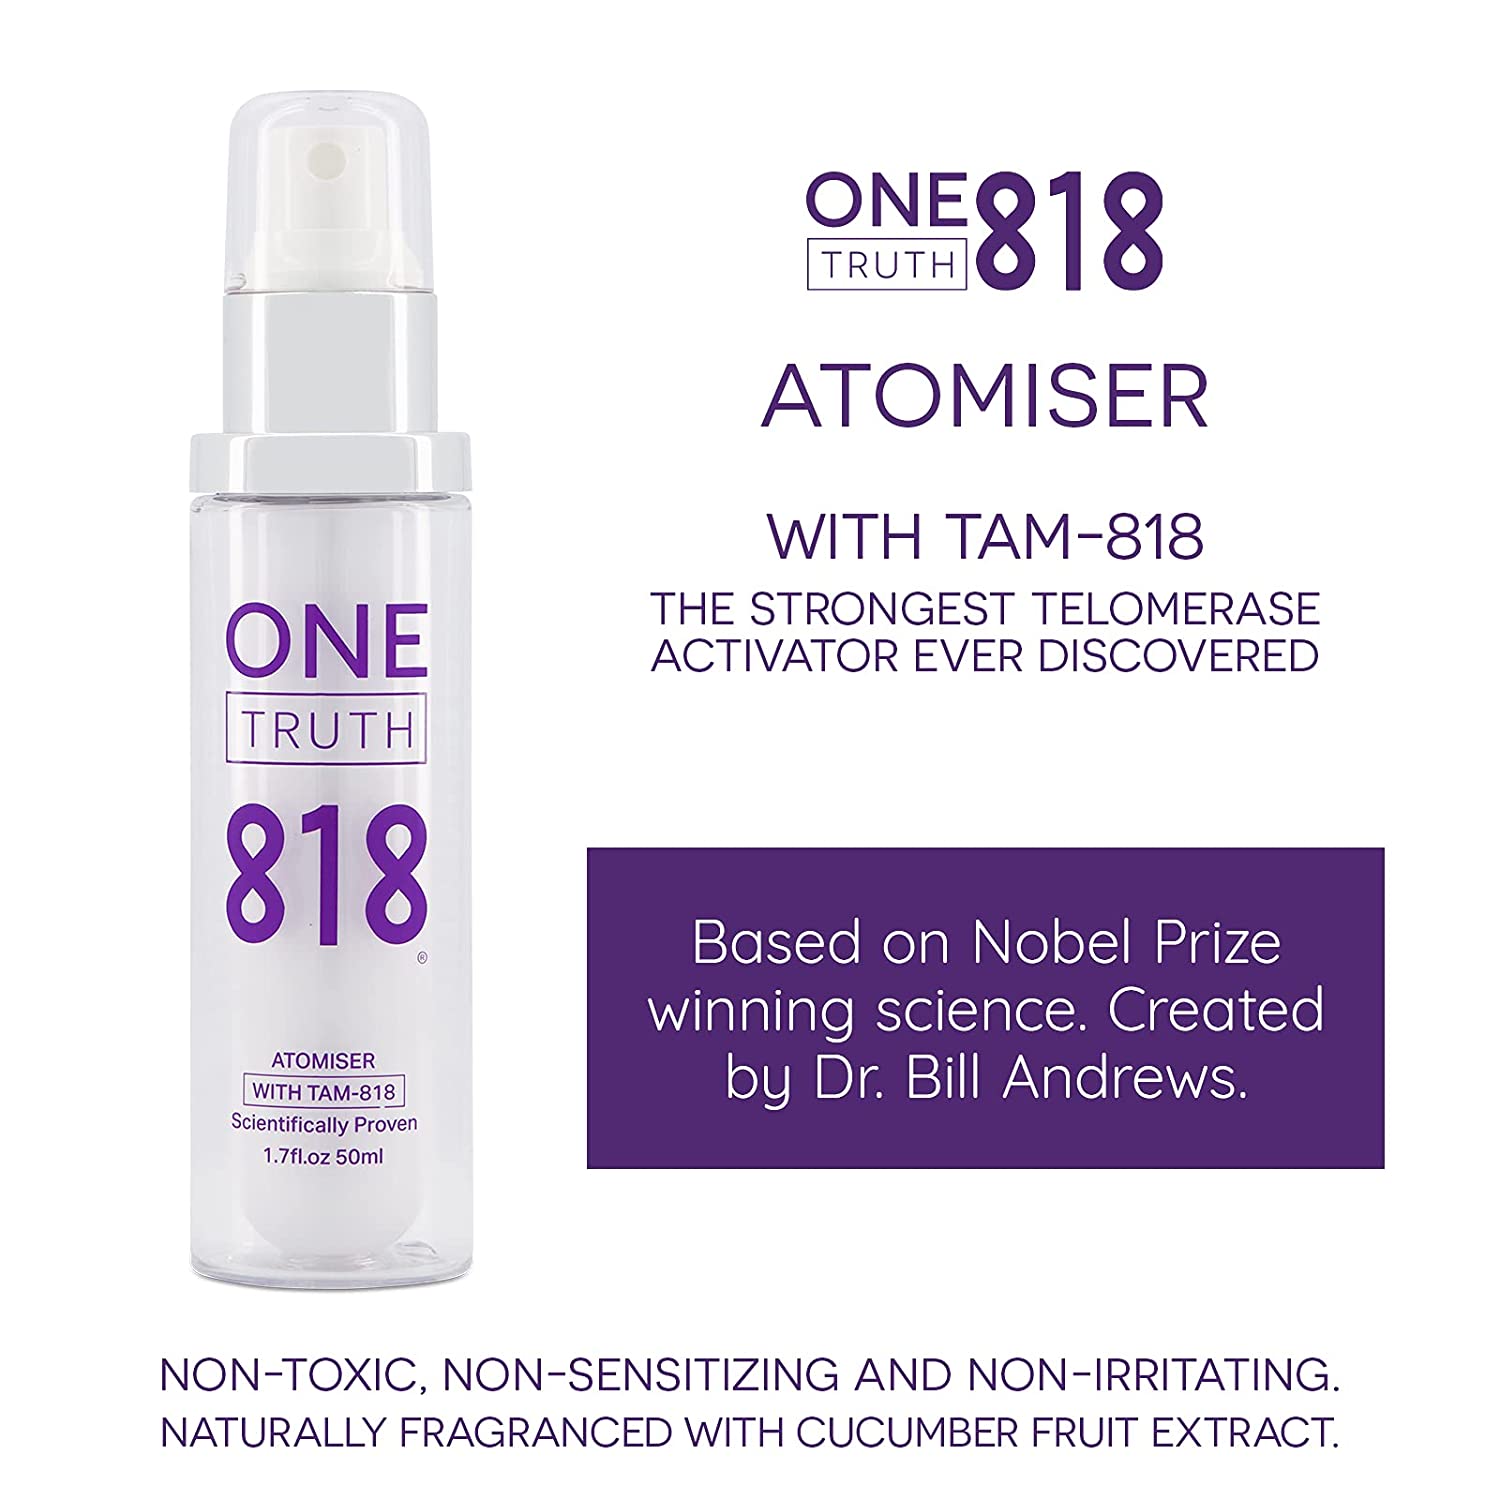 One Truth 818 Atomiser Spritz with TAM-818 (1.7 oz)